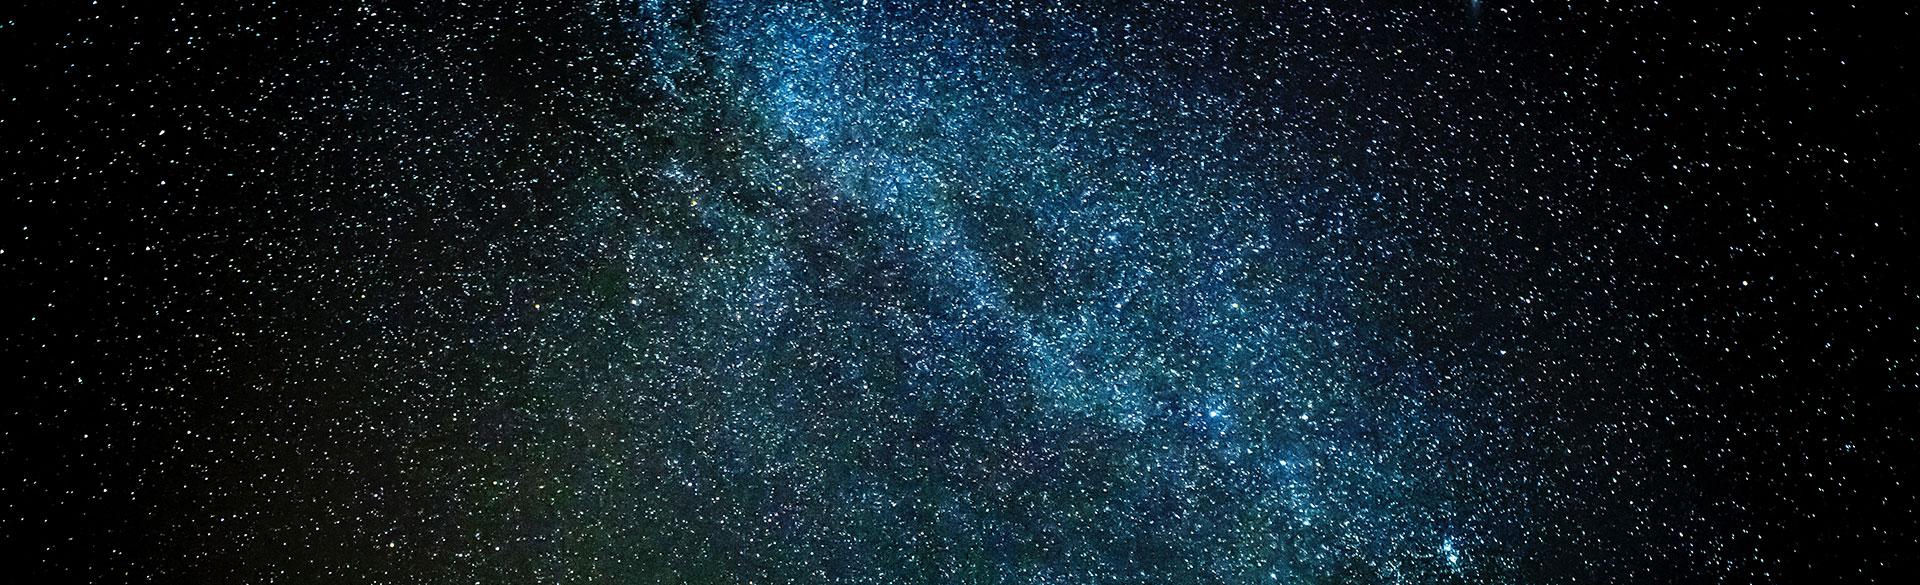 Dark Sky Stars Above Dunkery Beacon, Exmoor National Park Image: EPNA